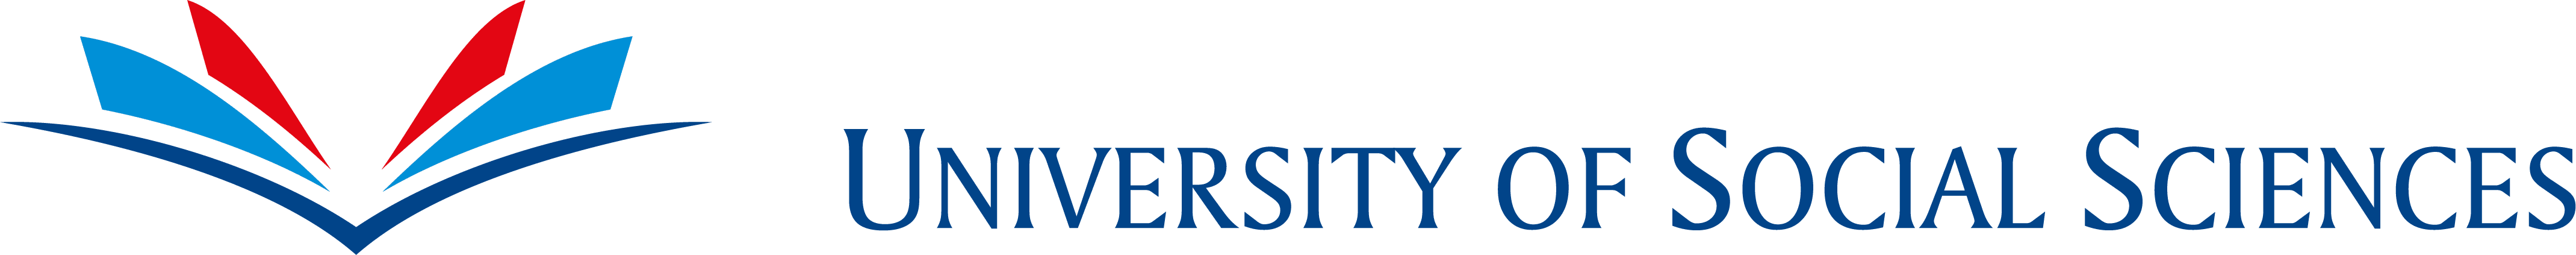 Institute of Management - University of Social Sciences - University of Social Sciences - University of SAN